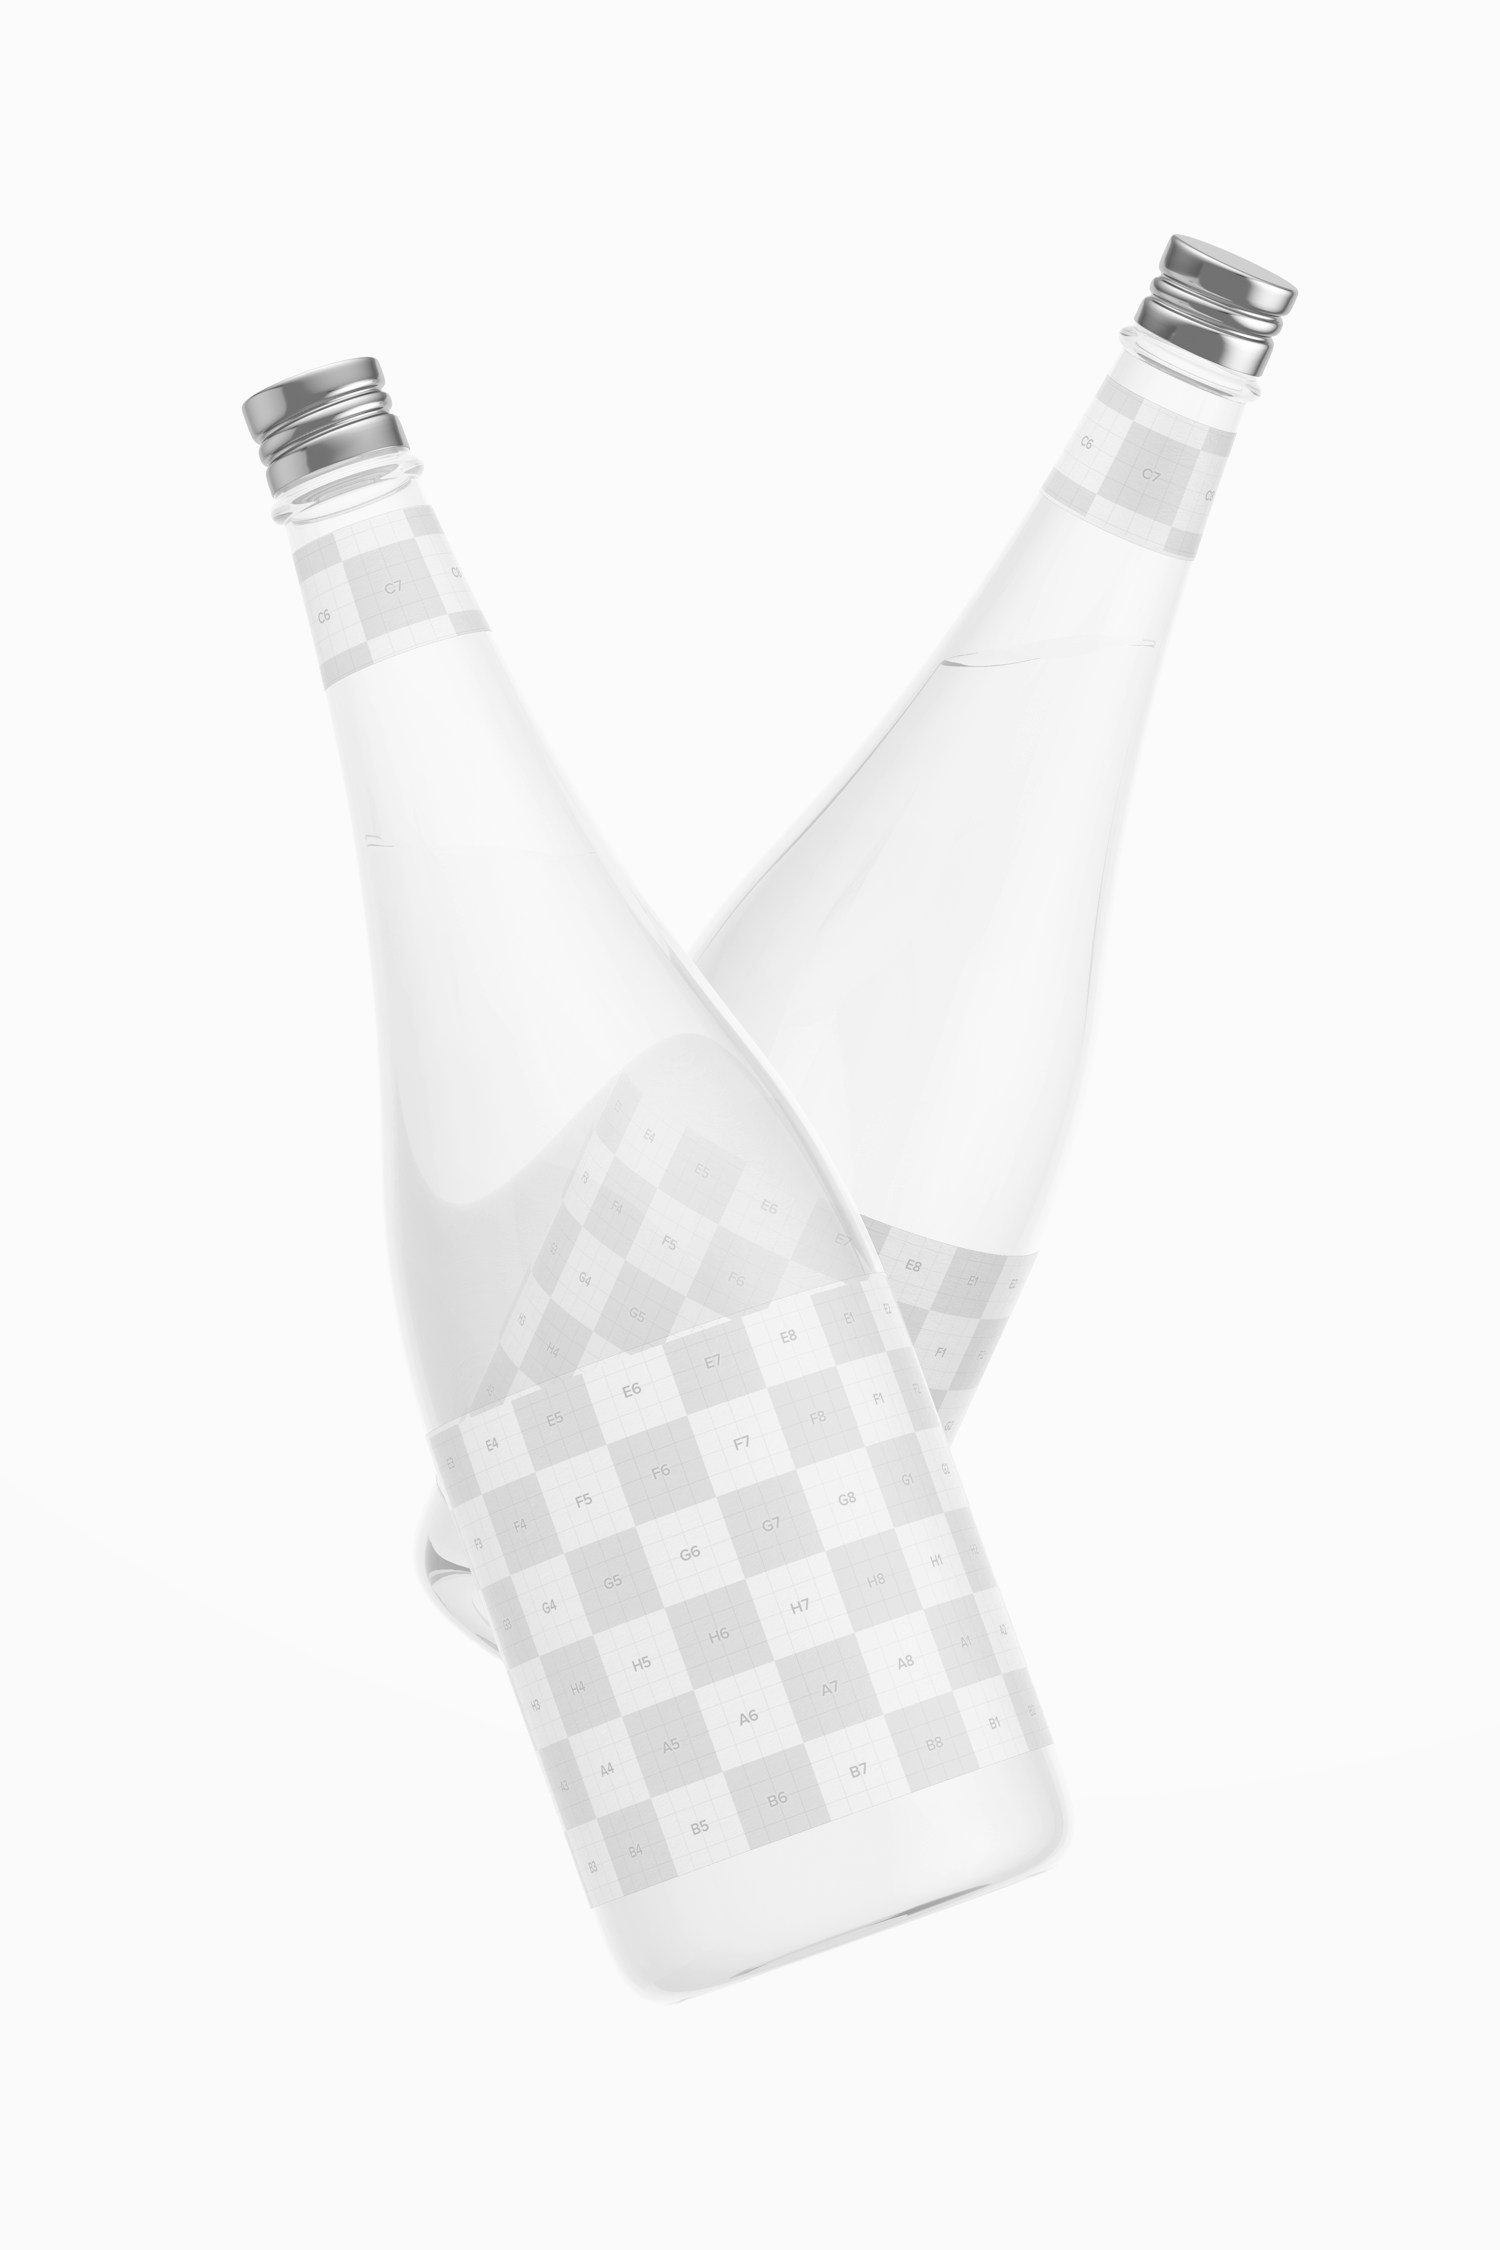 Glass Water Bottle Mockup, Floating